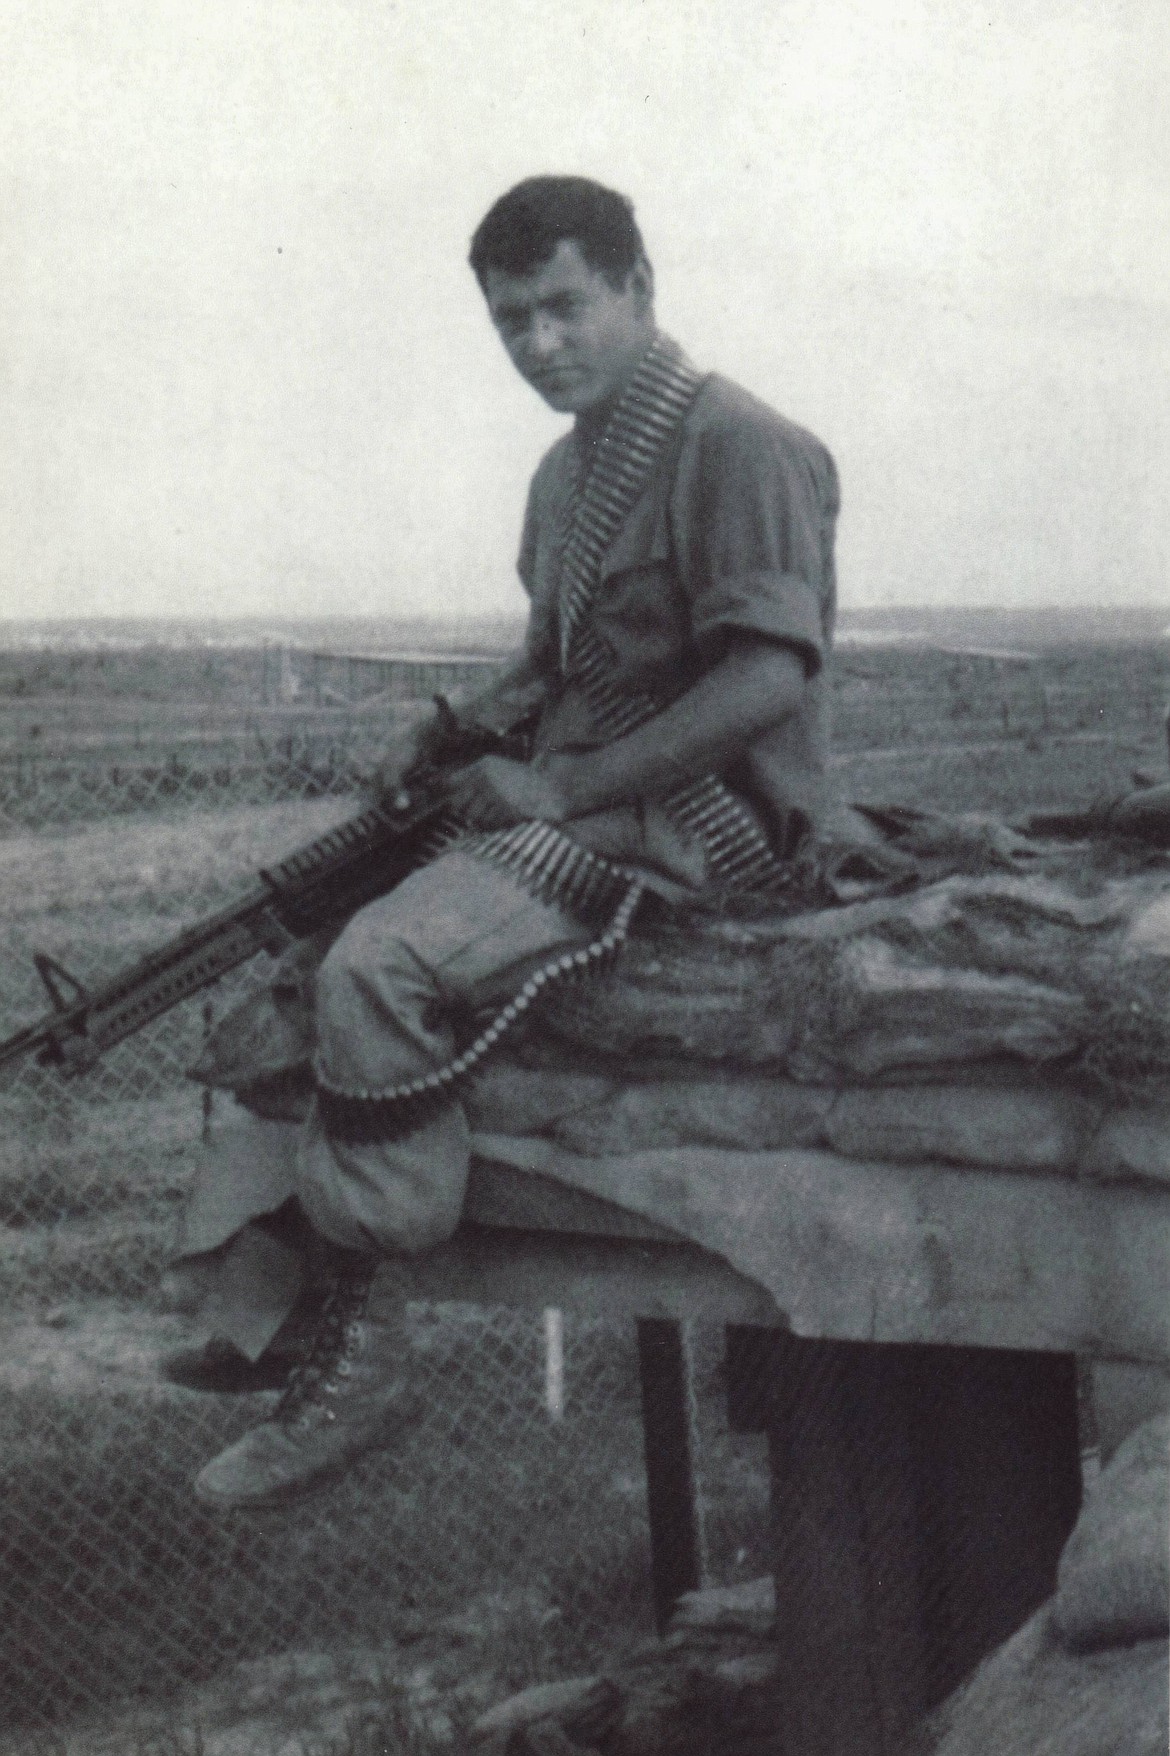 Vicente Sanchez during his tour of duty in Vietnam.